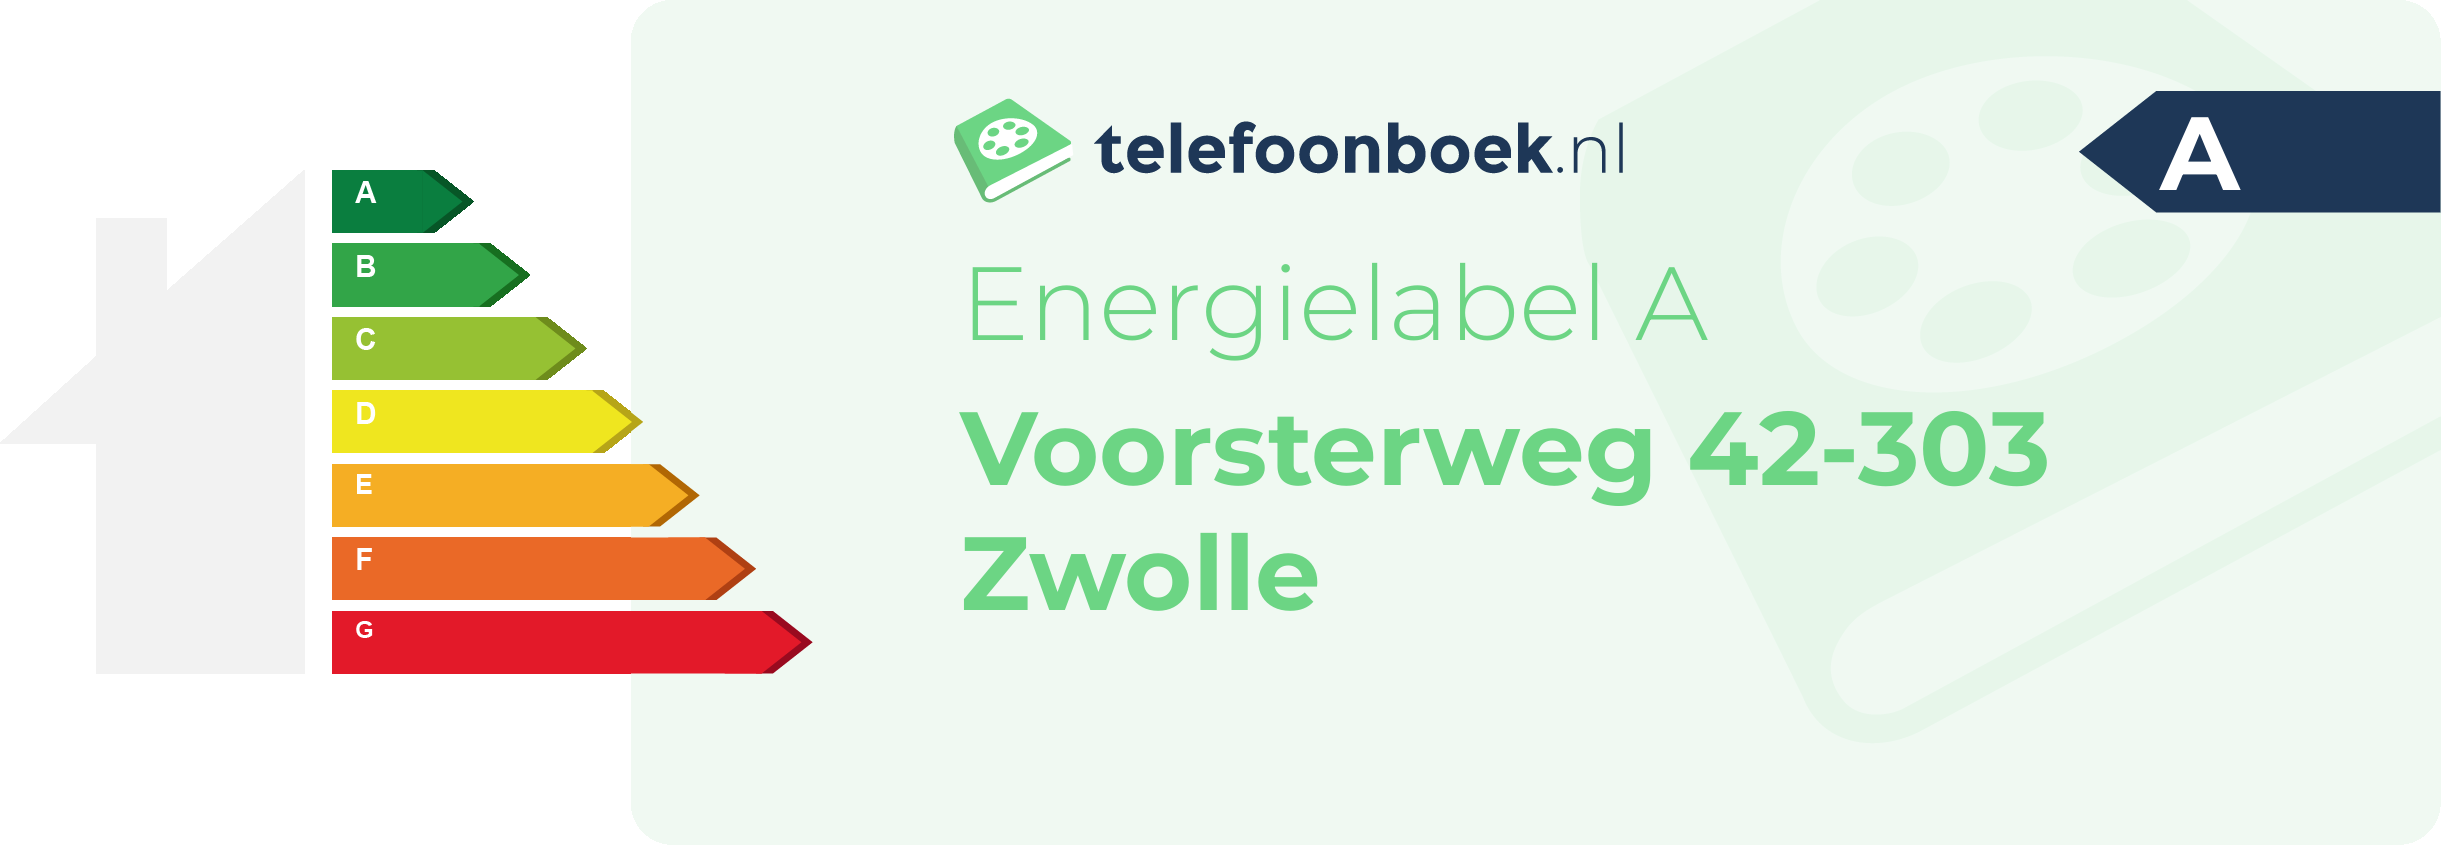 Energielabel Voorsterweg 42-303 Zwolle